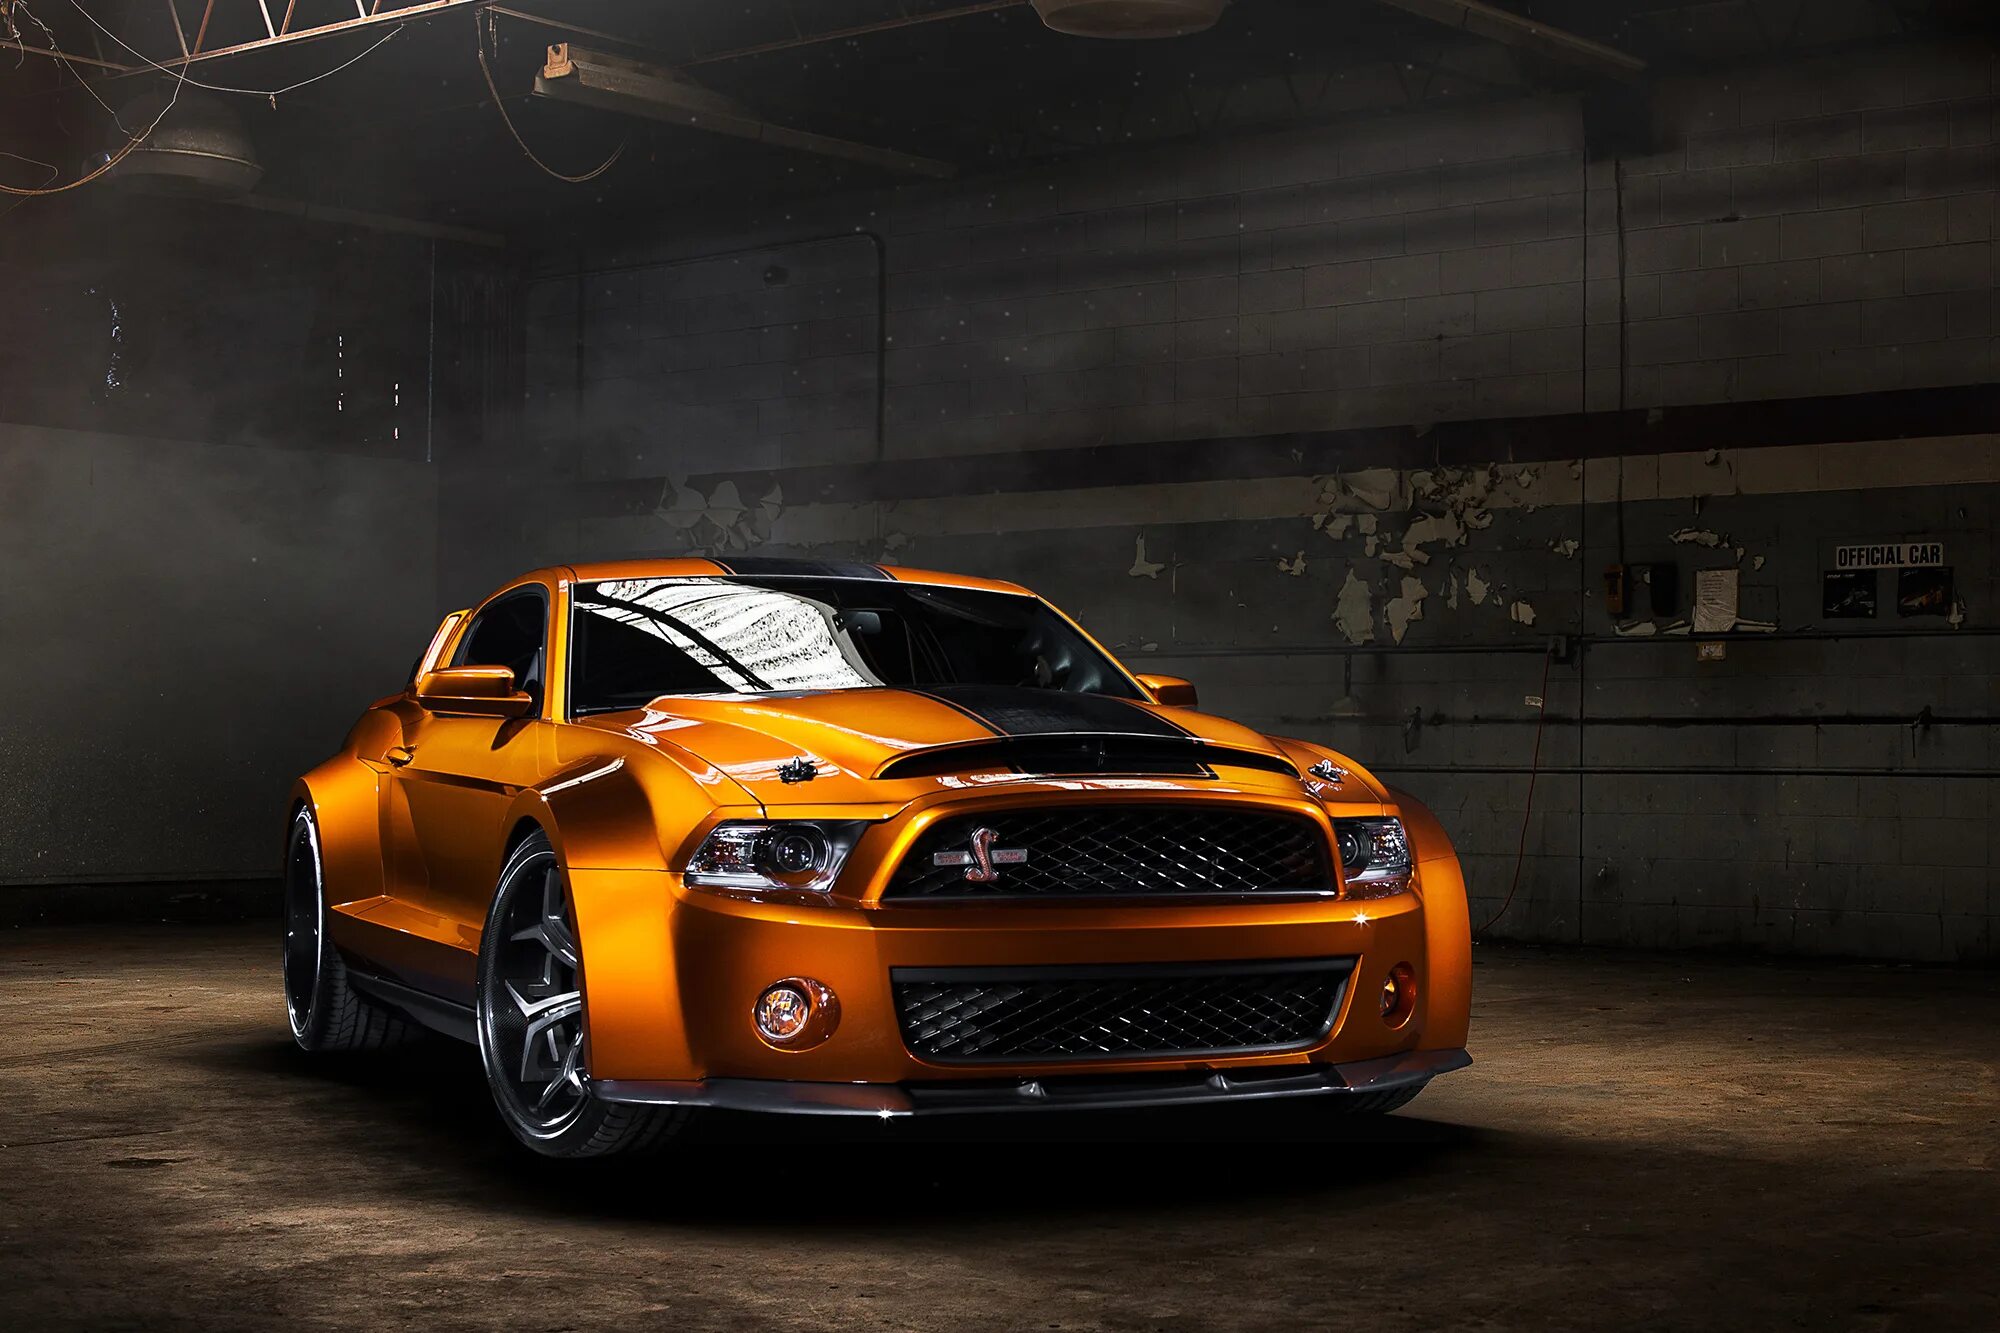 Тюнинг машин на пк. Ford Mustang Shelby gt500 оранжевый. Форд Мустанг оранжевый. Мустанг оранжевый Шелби. Форд Мустанг Шелби gt 500 оранжевый.